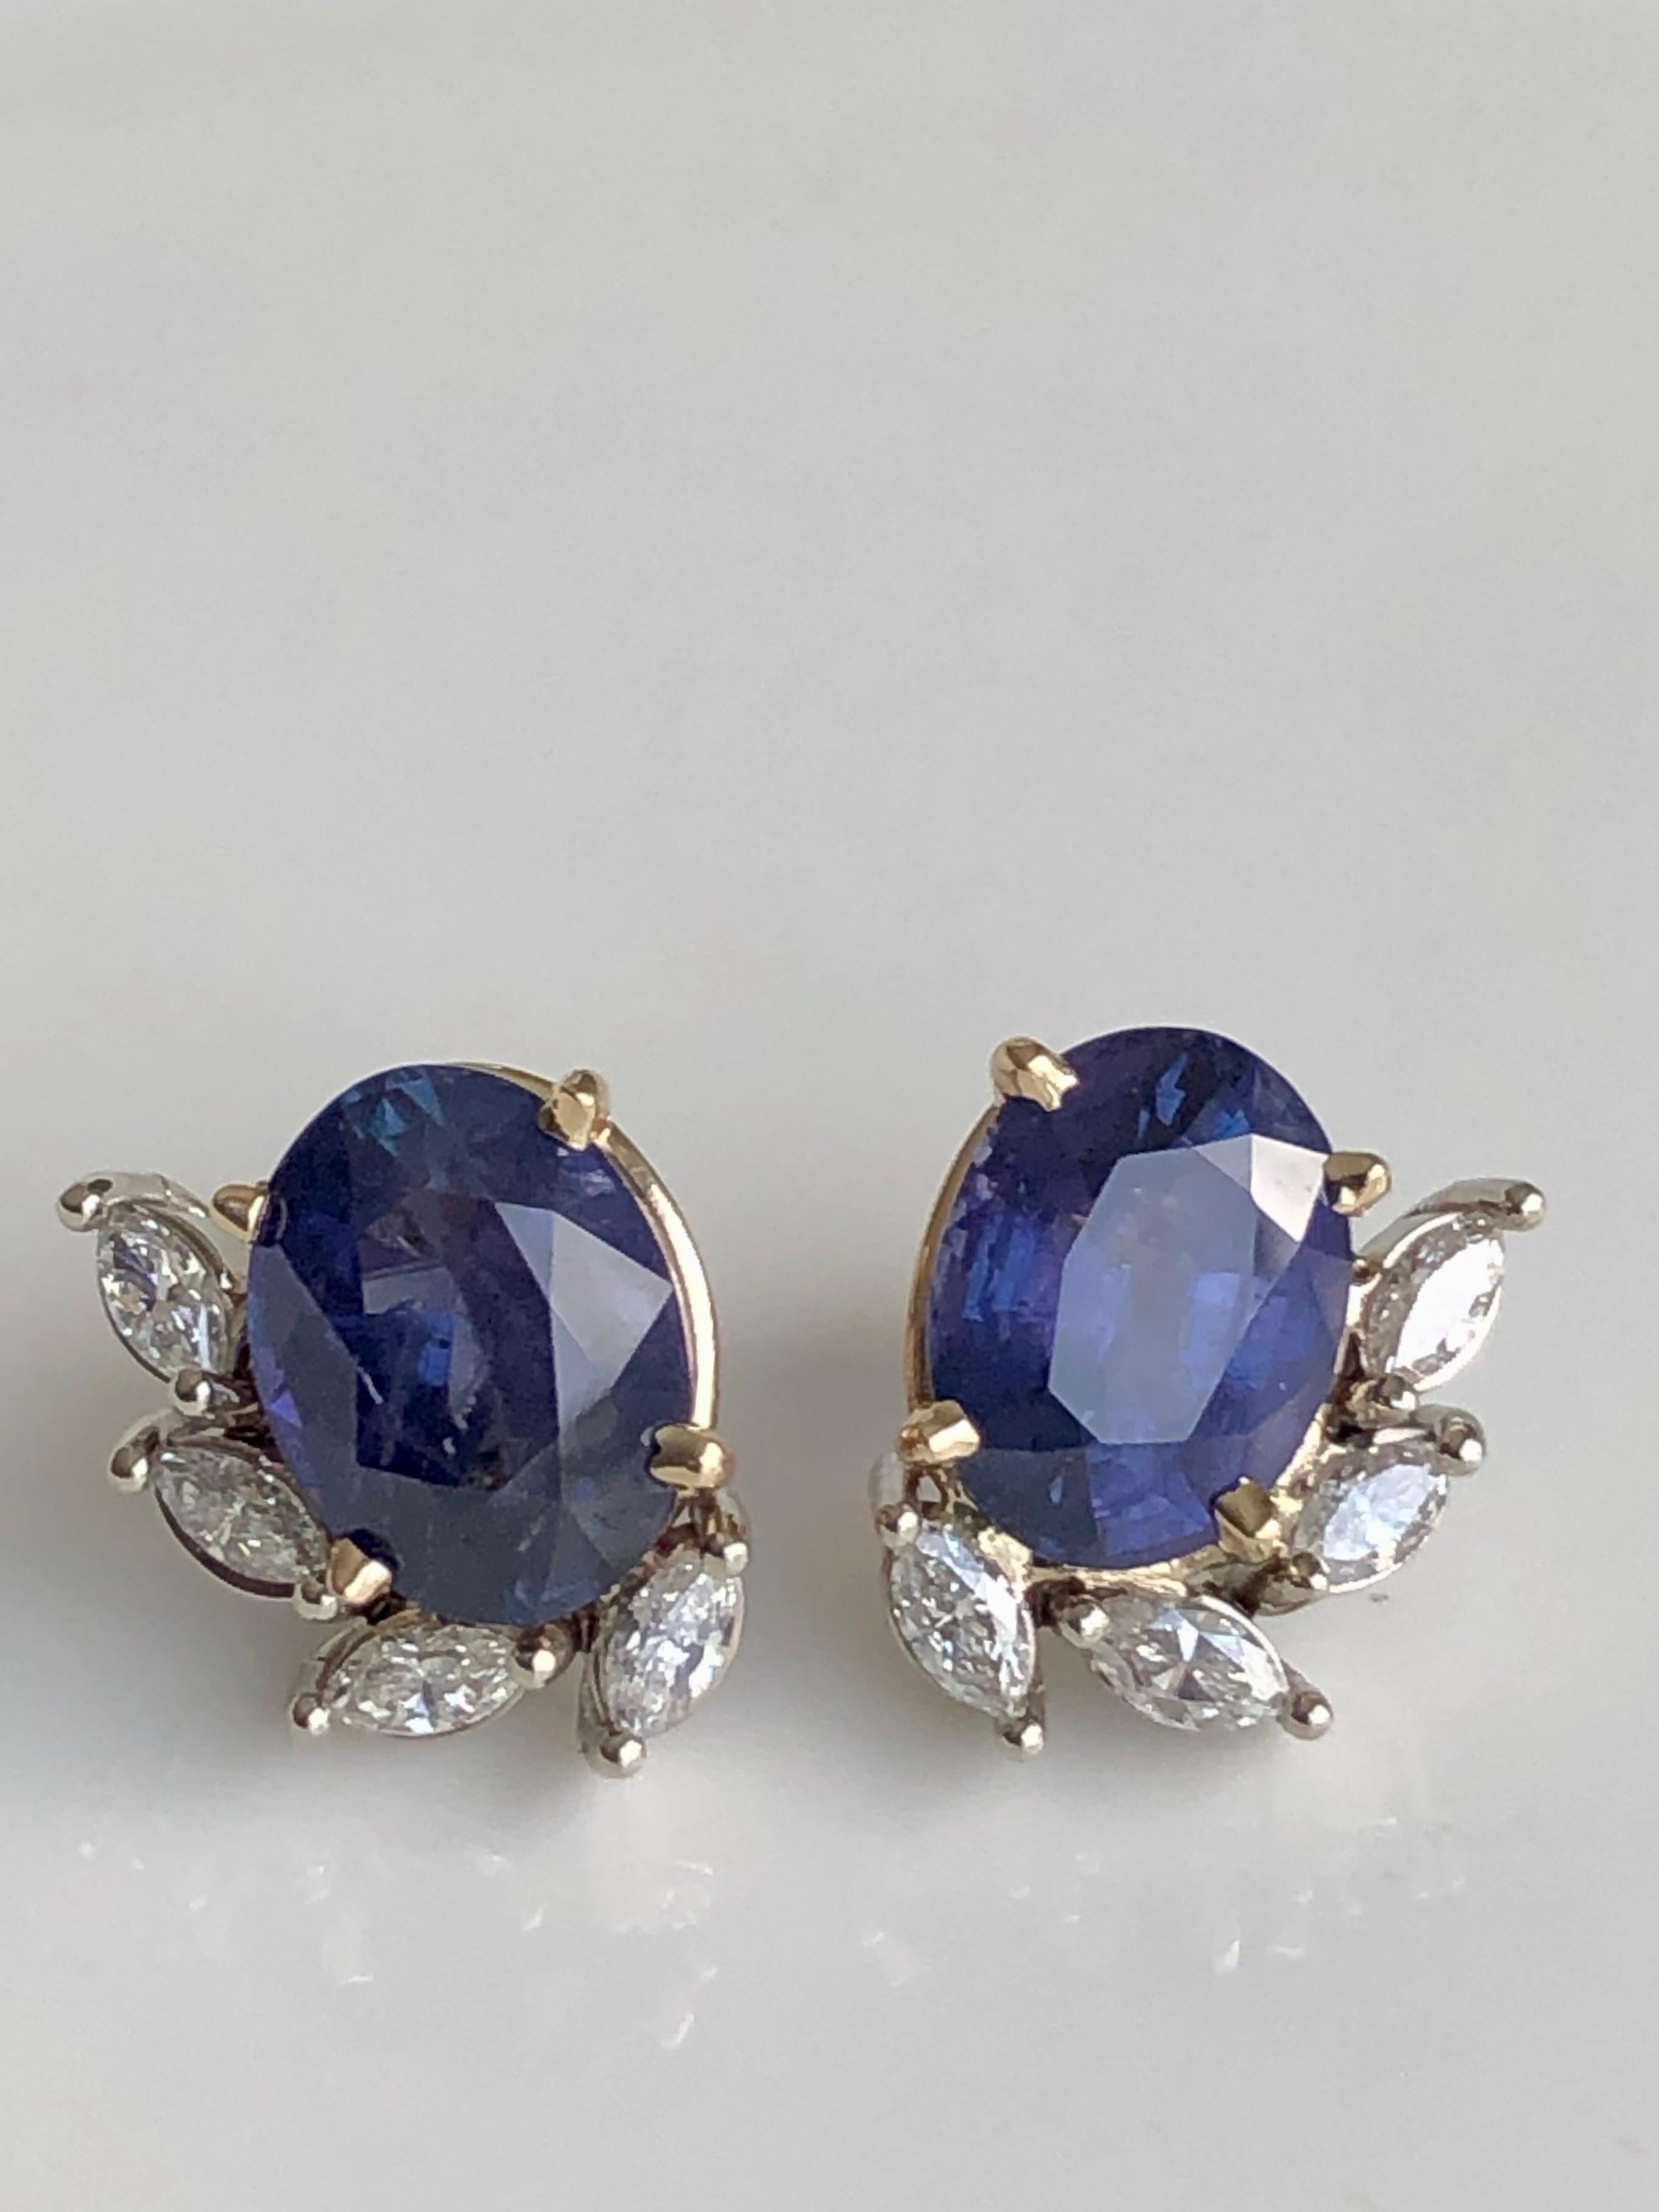 11.69 Carat No Heat Color Change Blue to Rich Violet Sapphire Diamond Earrings For Sale 2